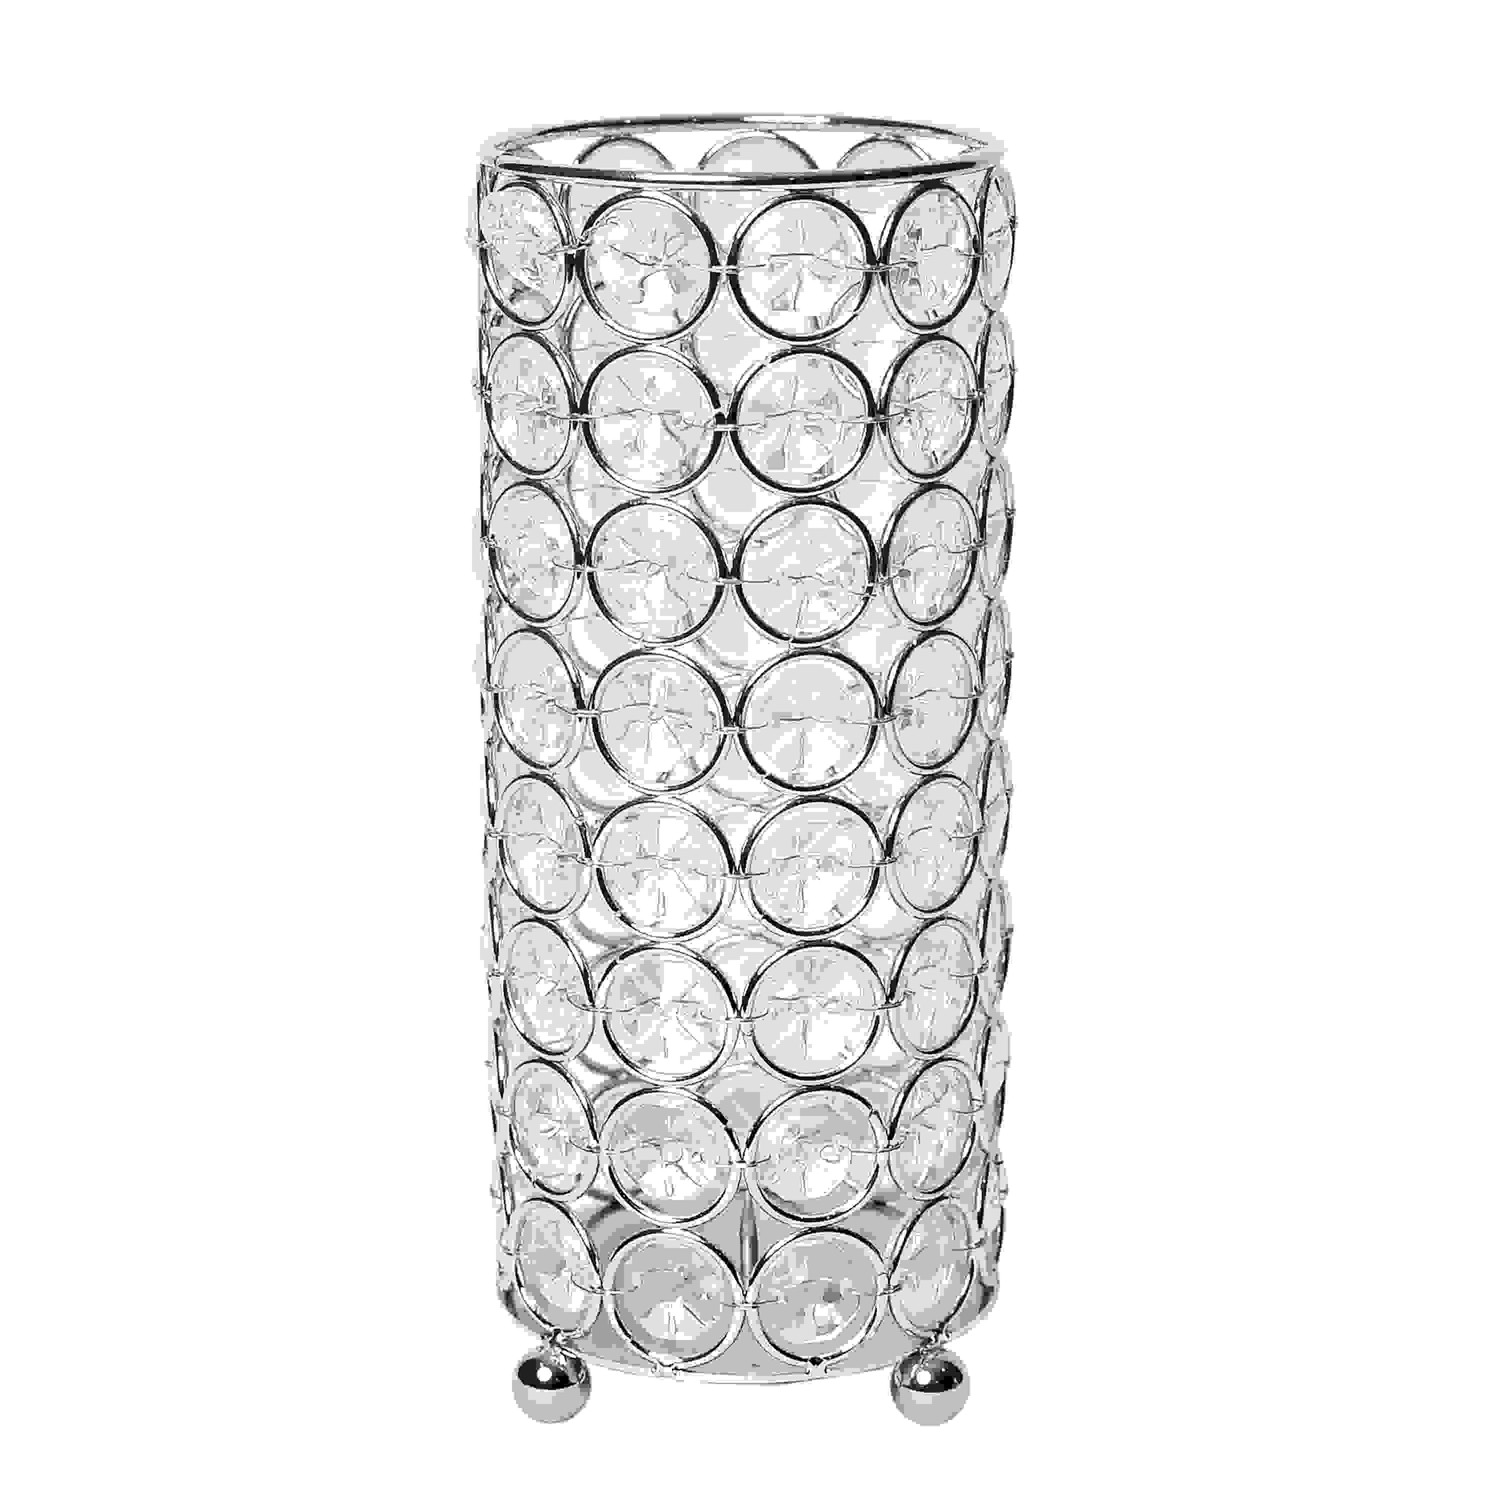 Elegant Designs Elipse Crystal Decorative Flower Vase, Candle Holder, Wedding Centerpiece, 7.75 Inch, Chrome